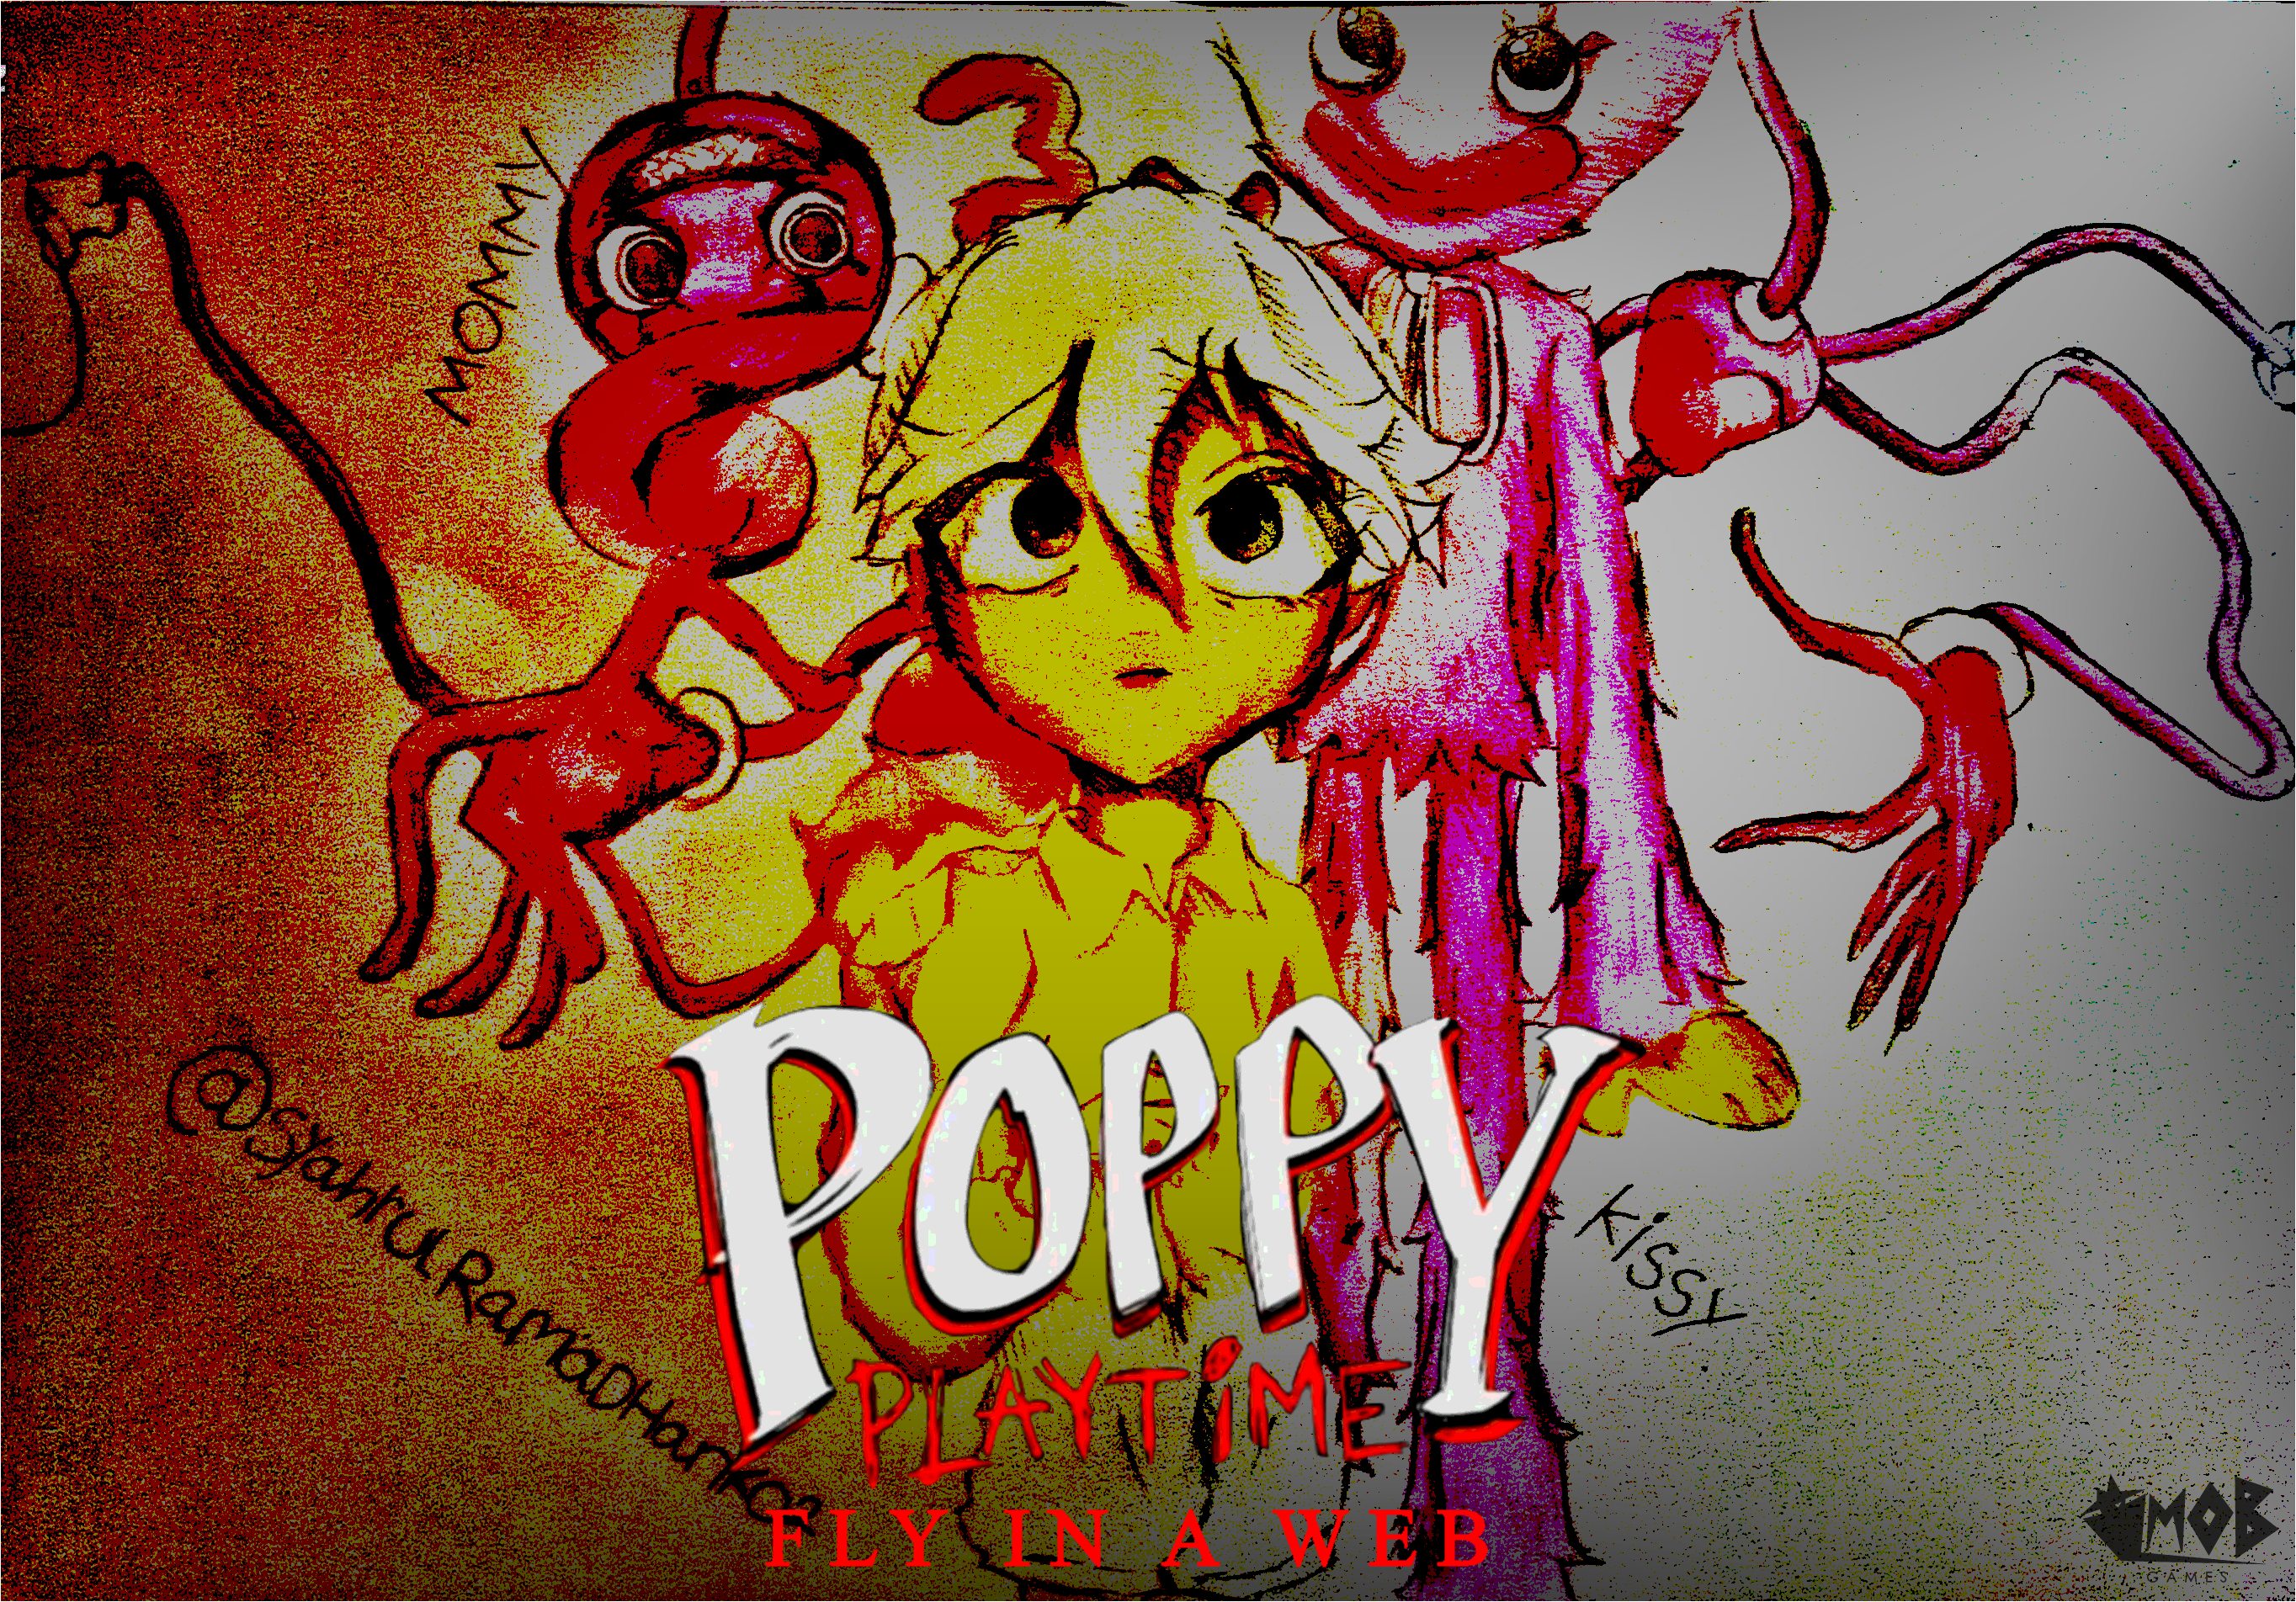 Poppy Playtime chapter 2 Fell by SyahrulRamadhank02 on DeviantArt